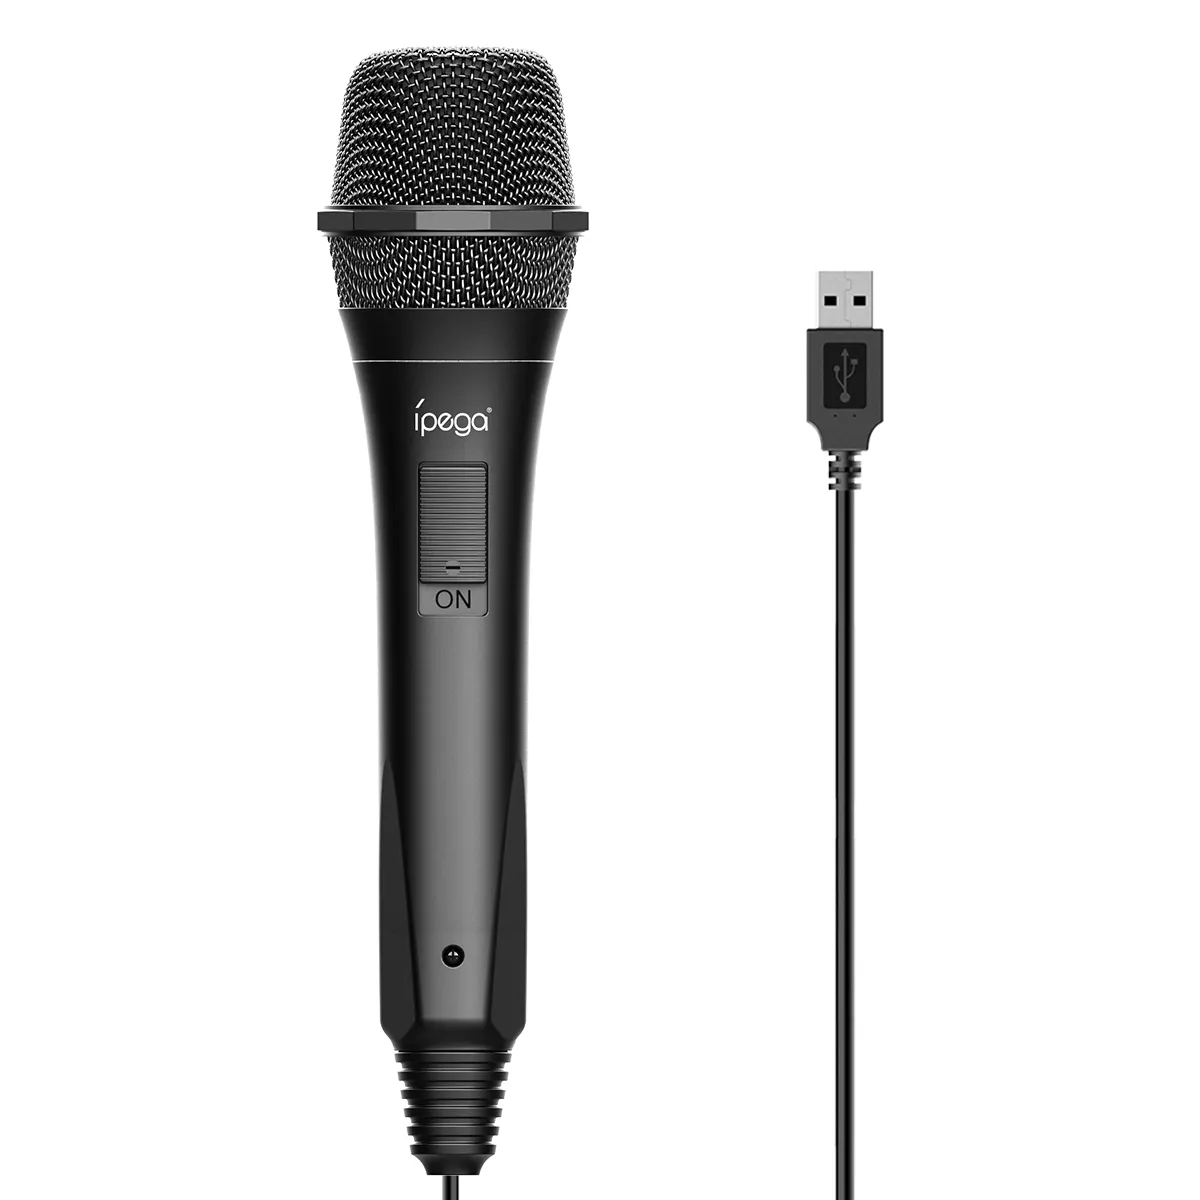 Nuevo ipega PG9209 cable USB Gamepad micrófono de Karaoke cantando micrófono para Nintendo interruptor PS4 consola Wii U de micrófono